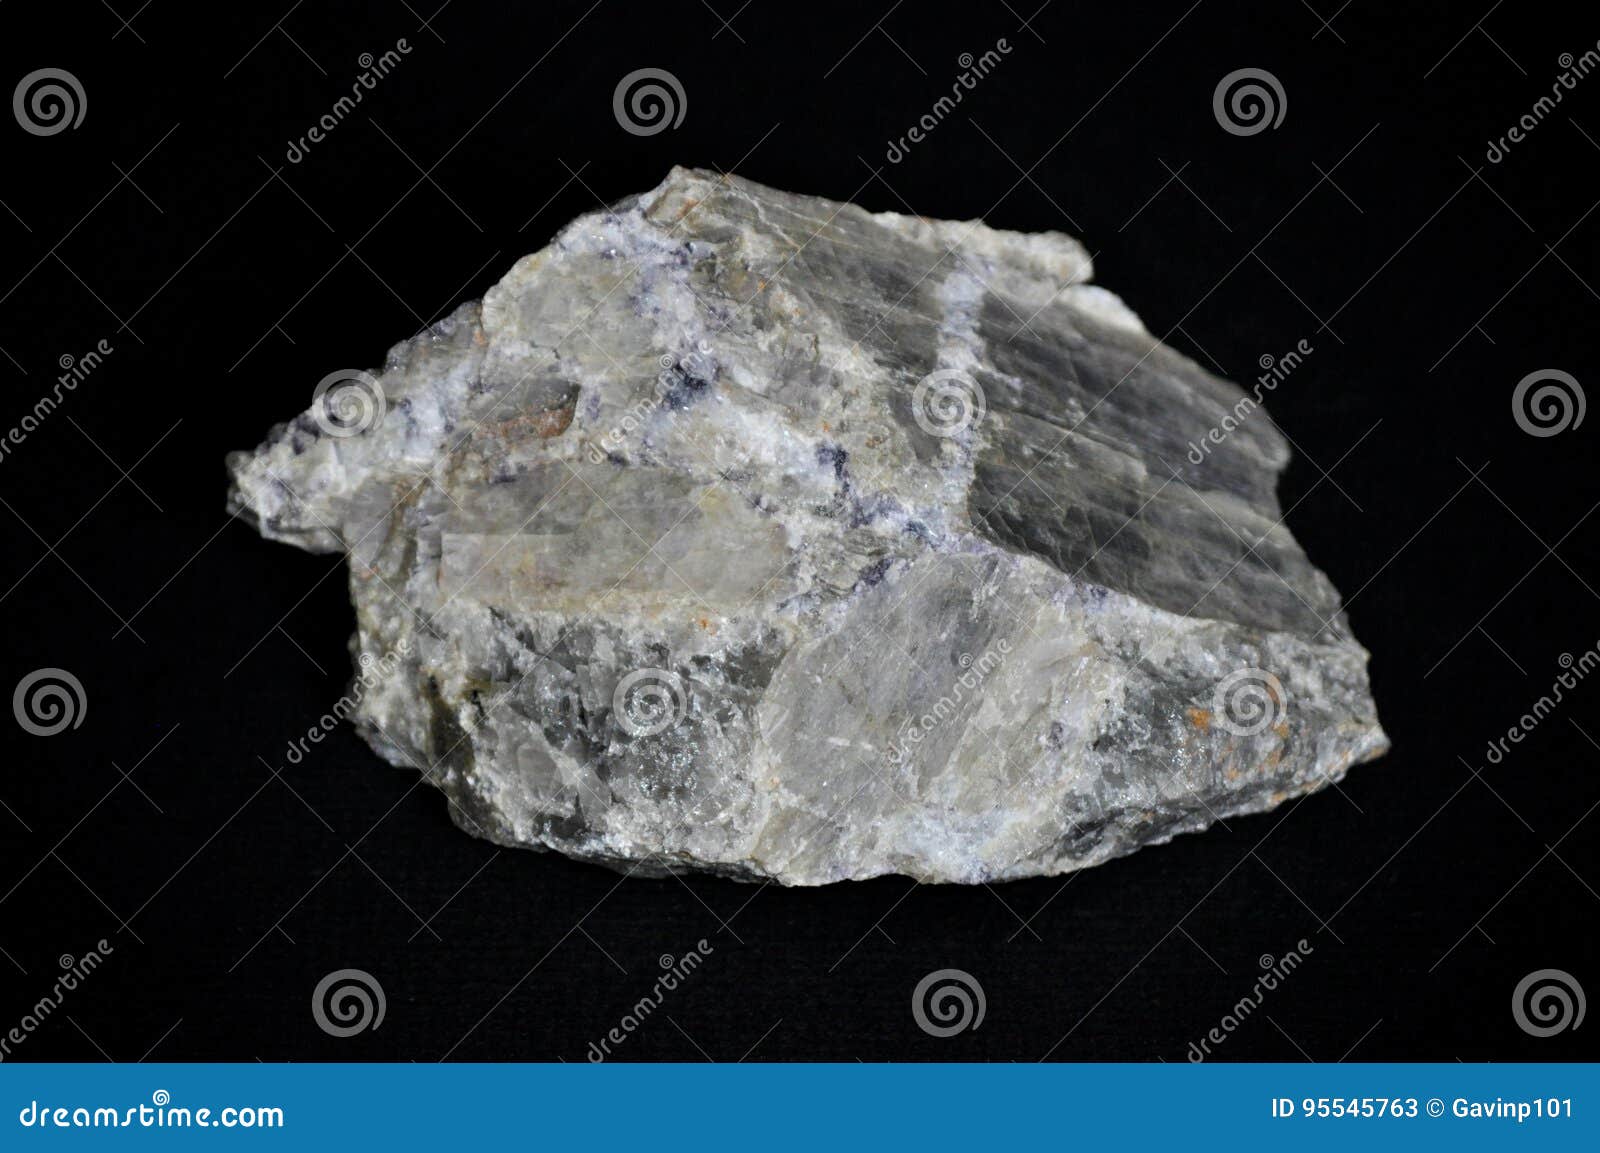 lithium spodumene pegmatite crystal rock sample